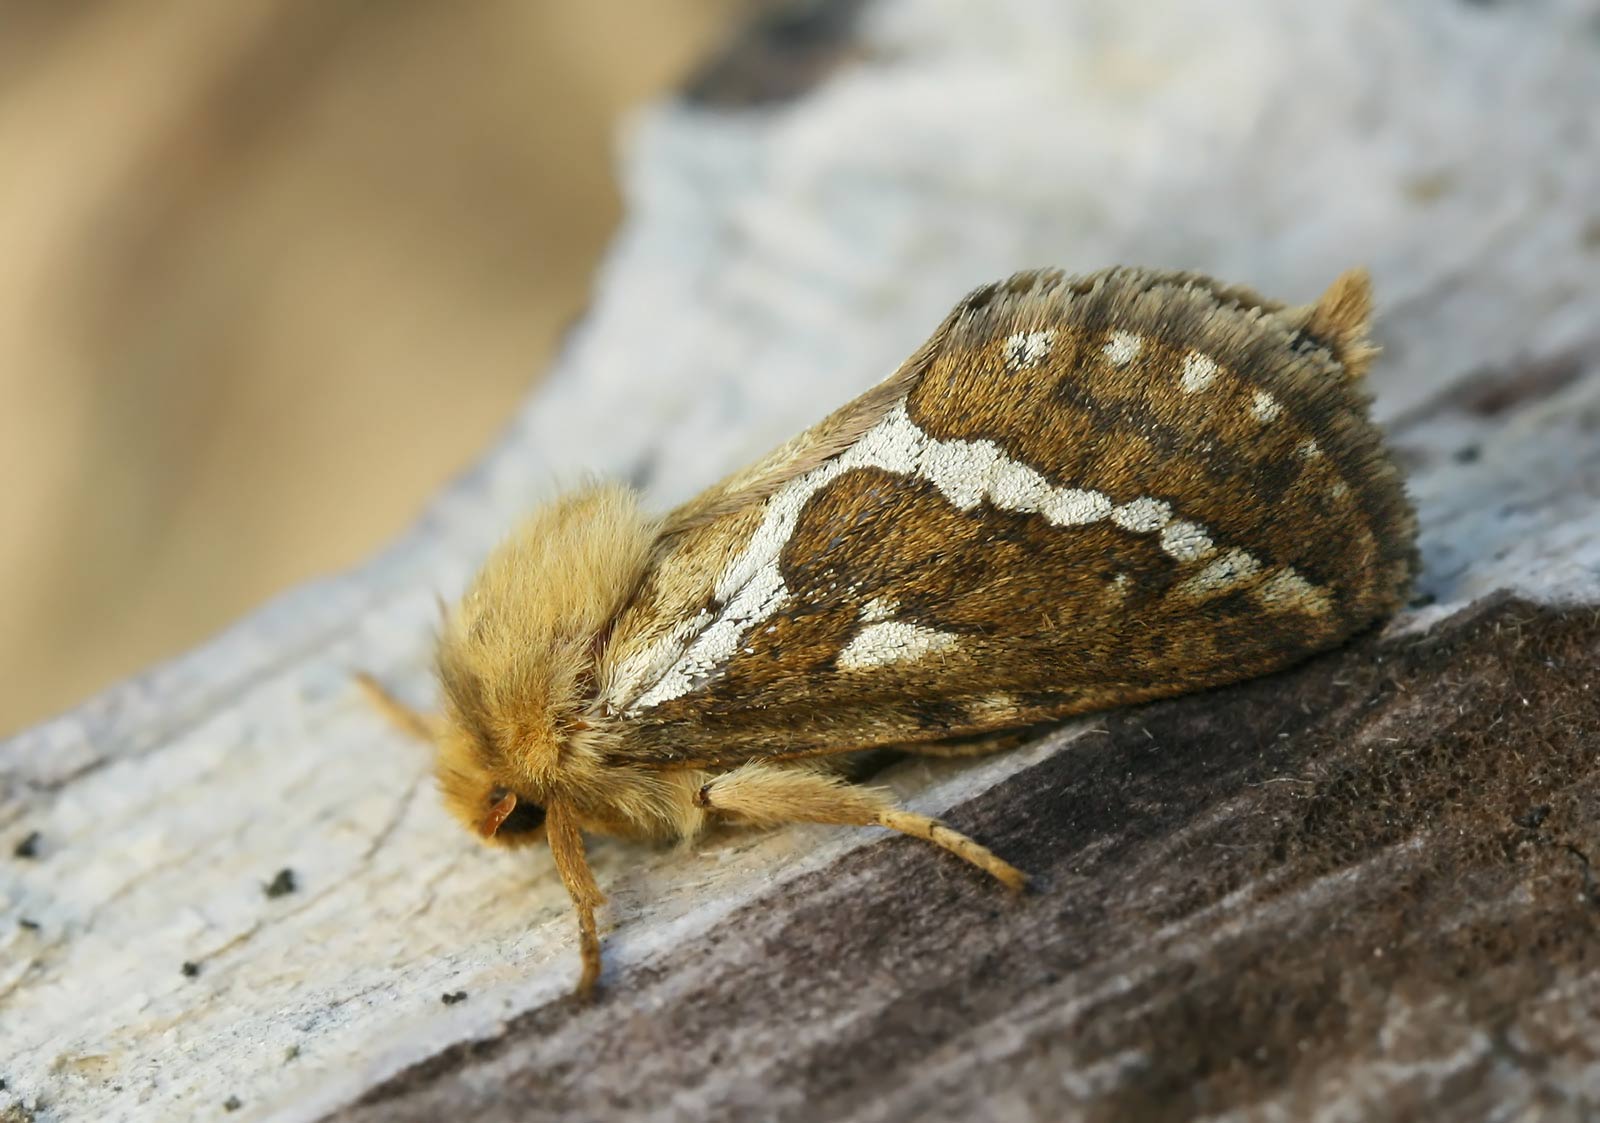 Korscheltellus lupulinus